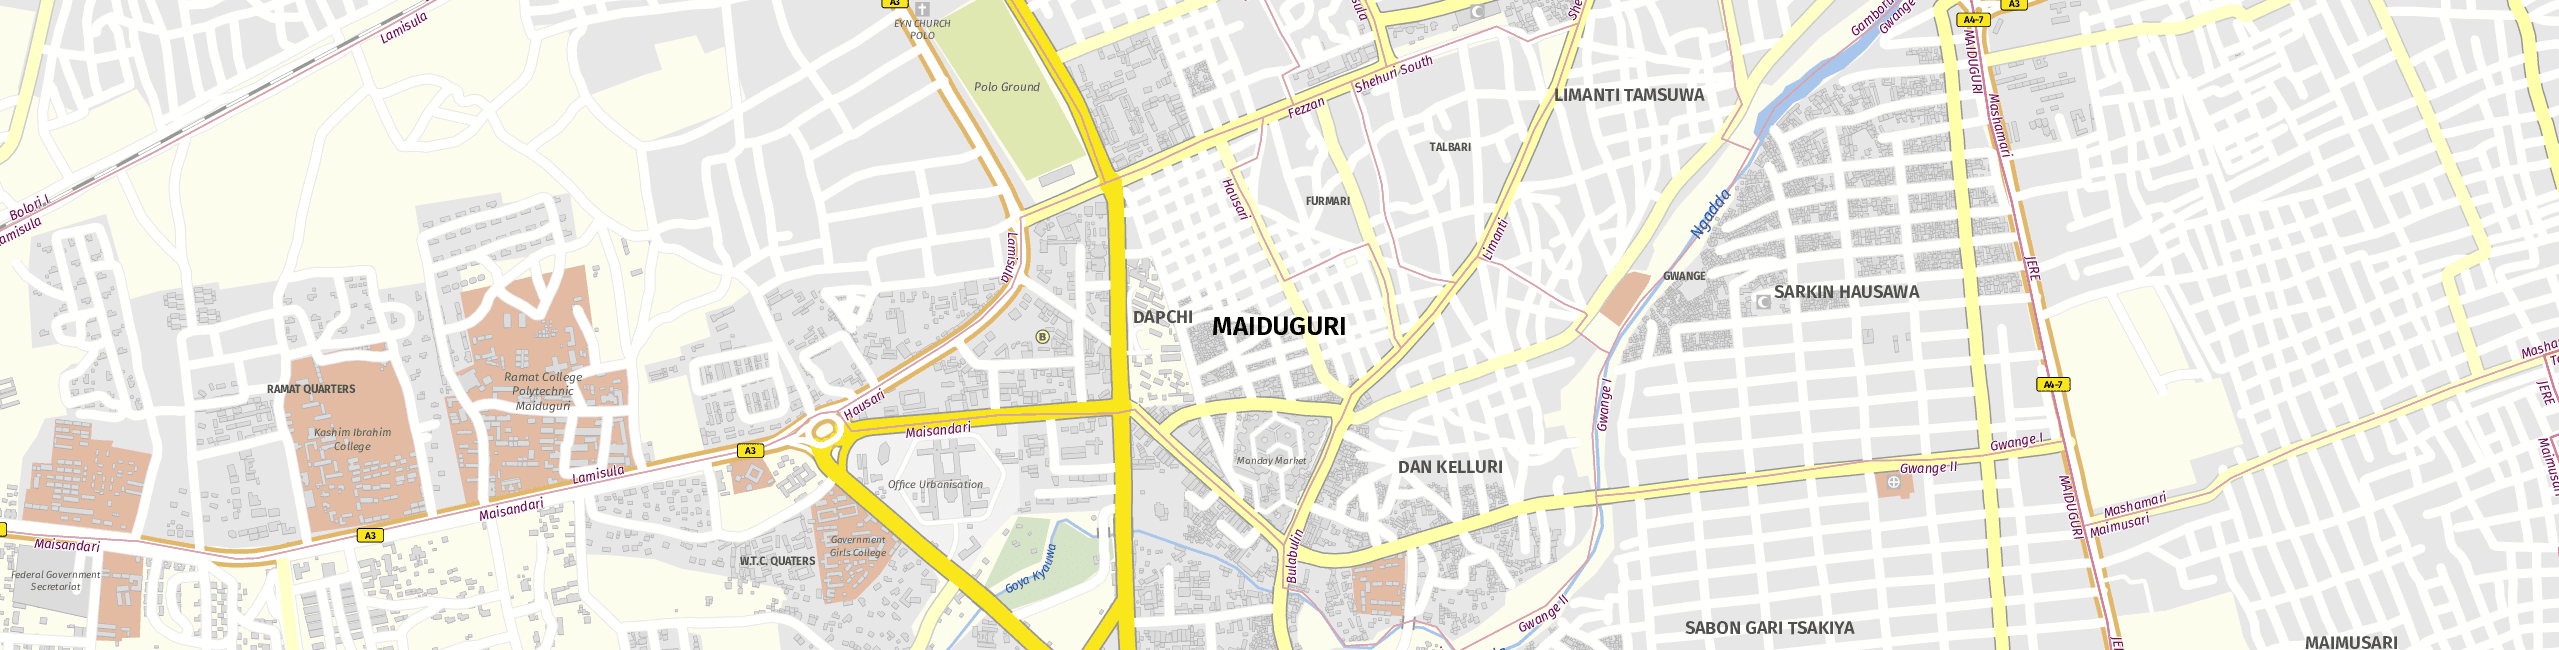 Stadtplan Maiduguri zum Downloaden.